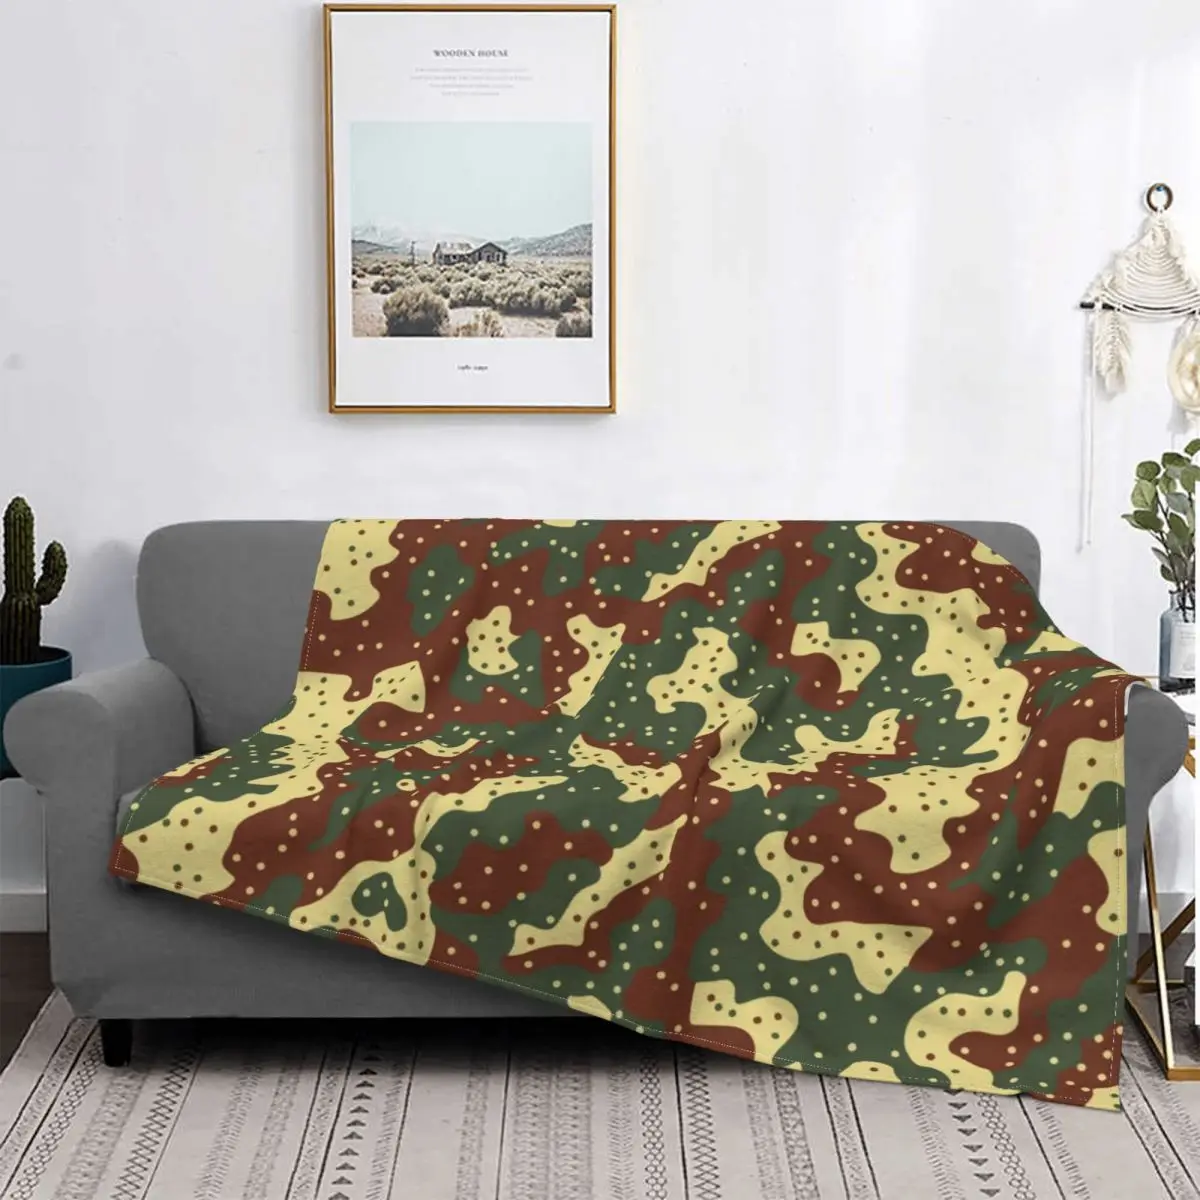 War Two Ww2 Ambush Camouflage Blanket Camo Military Winter Warm Bedspread Plush Soft Cover Fleece Throw Blanket Bedding Bed